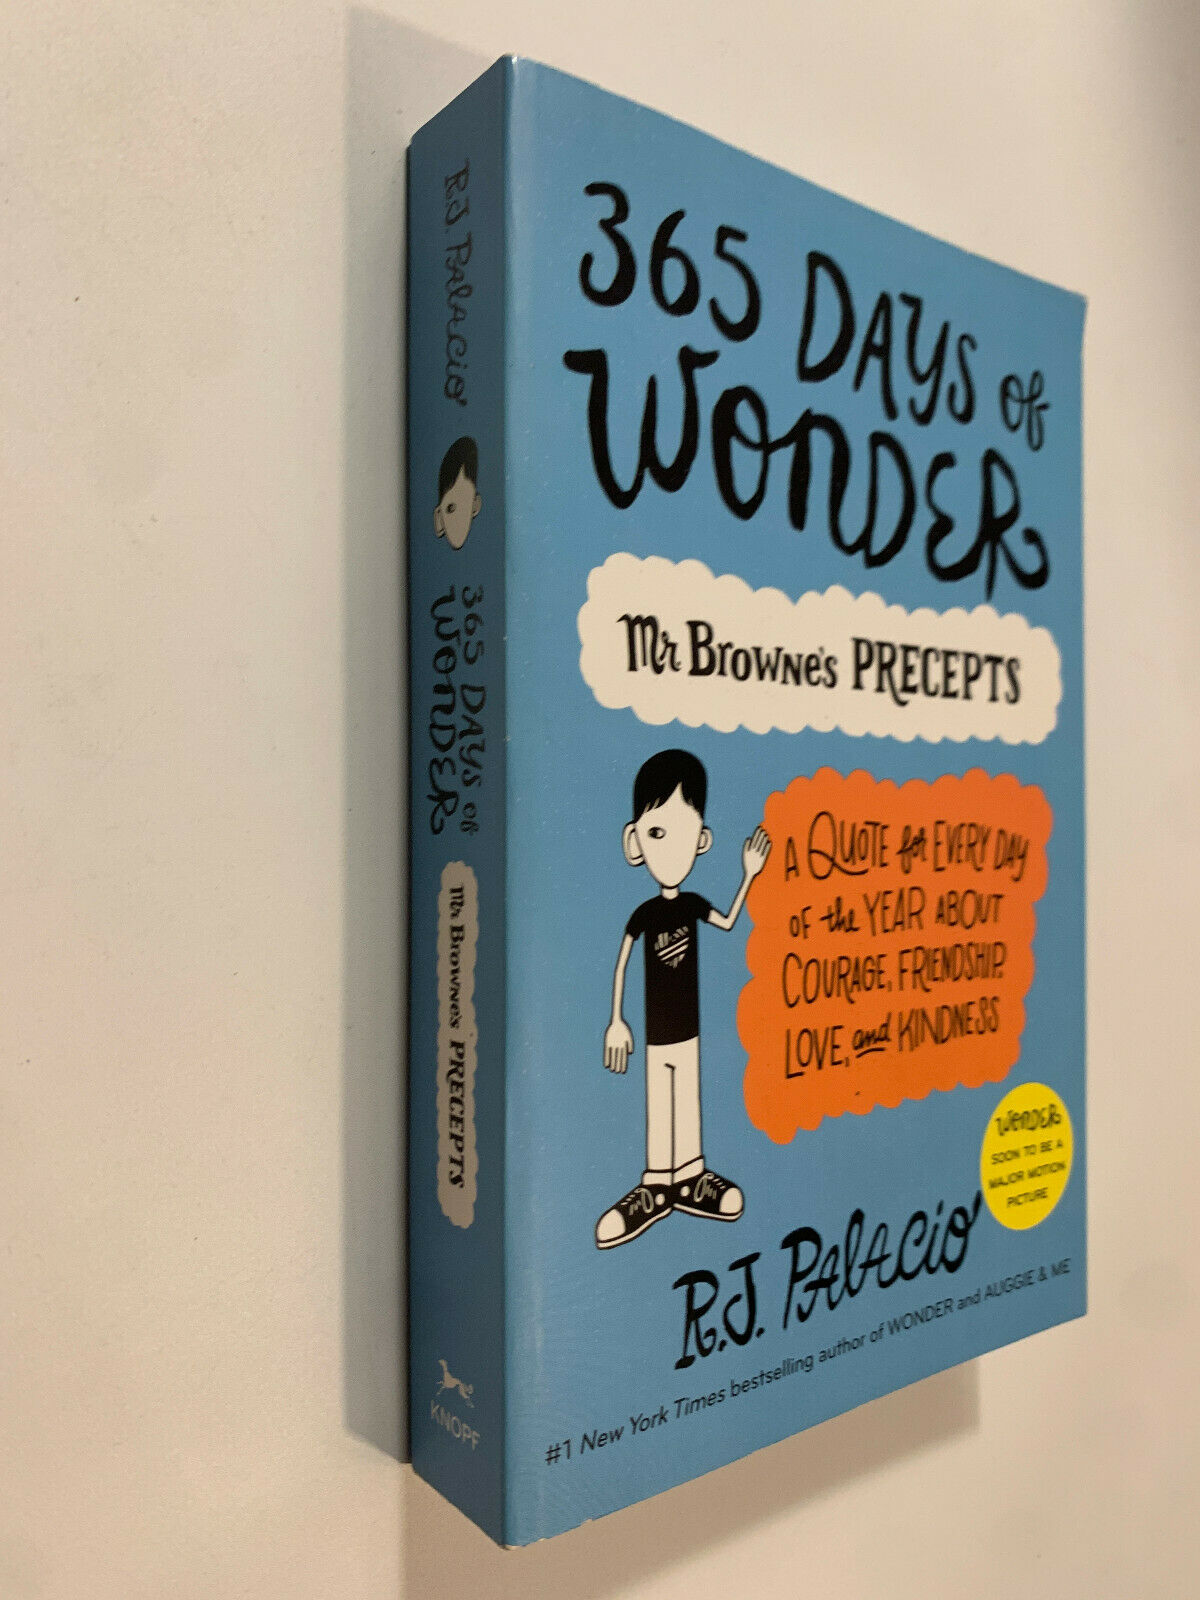 365 Days of Wonder: Mr. Browne's Precepts, by Palacio, R. J.